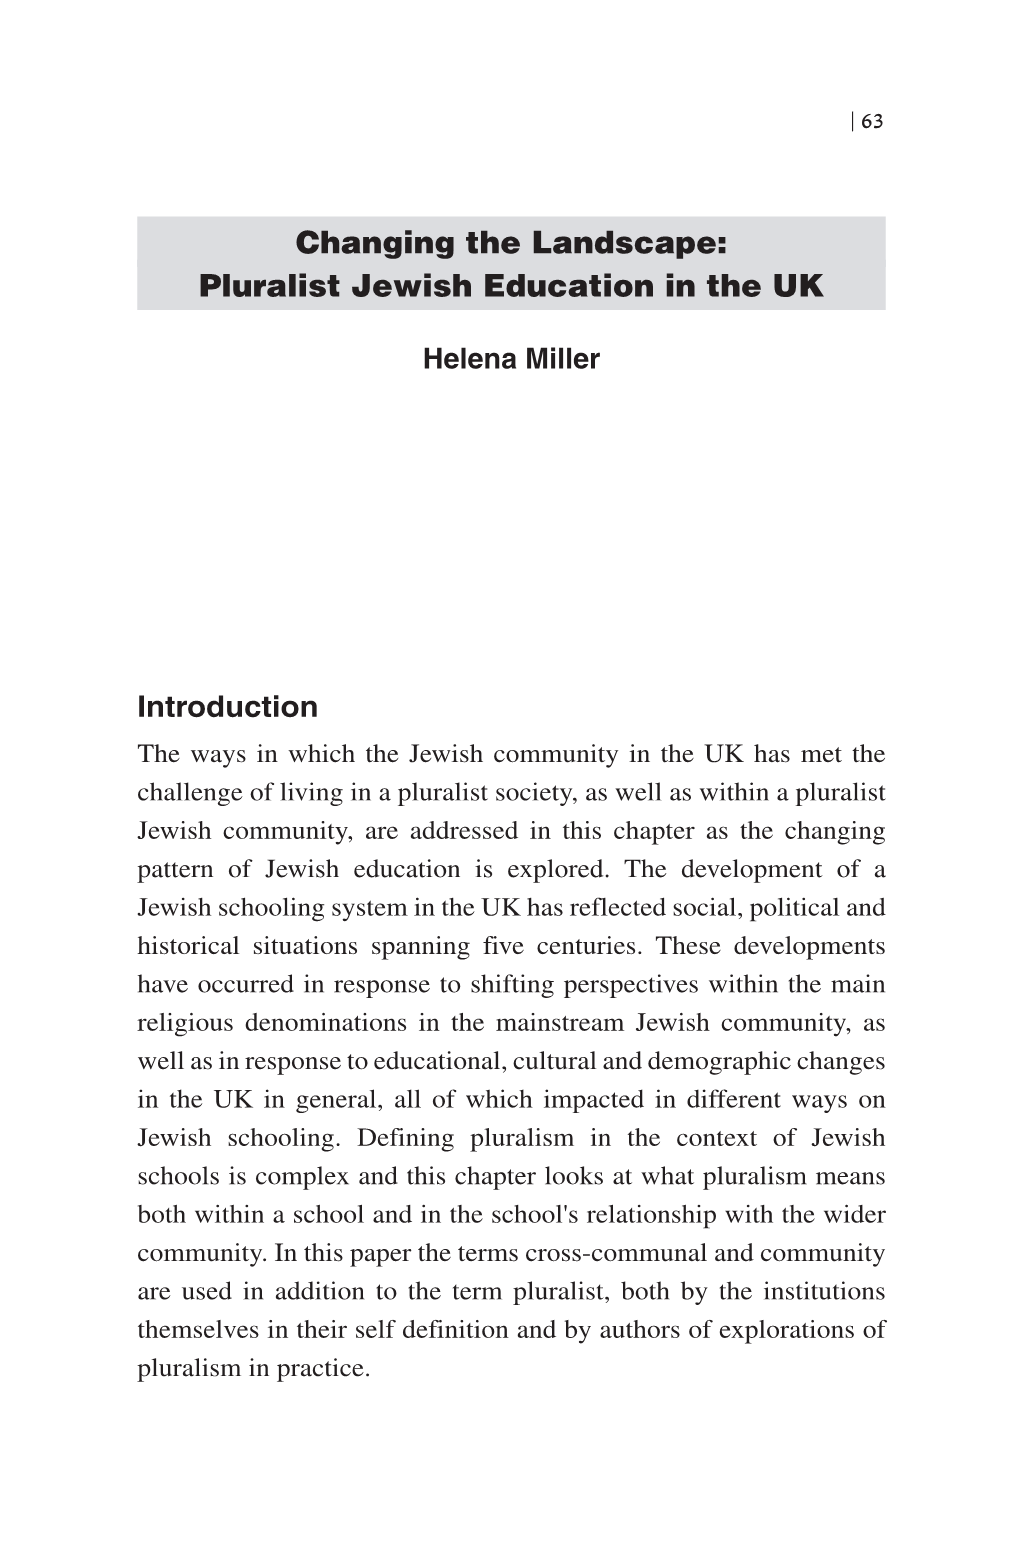 Pluralist Jewish Education in the UK